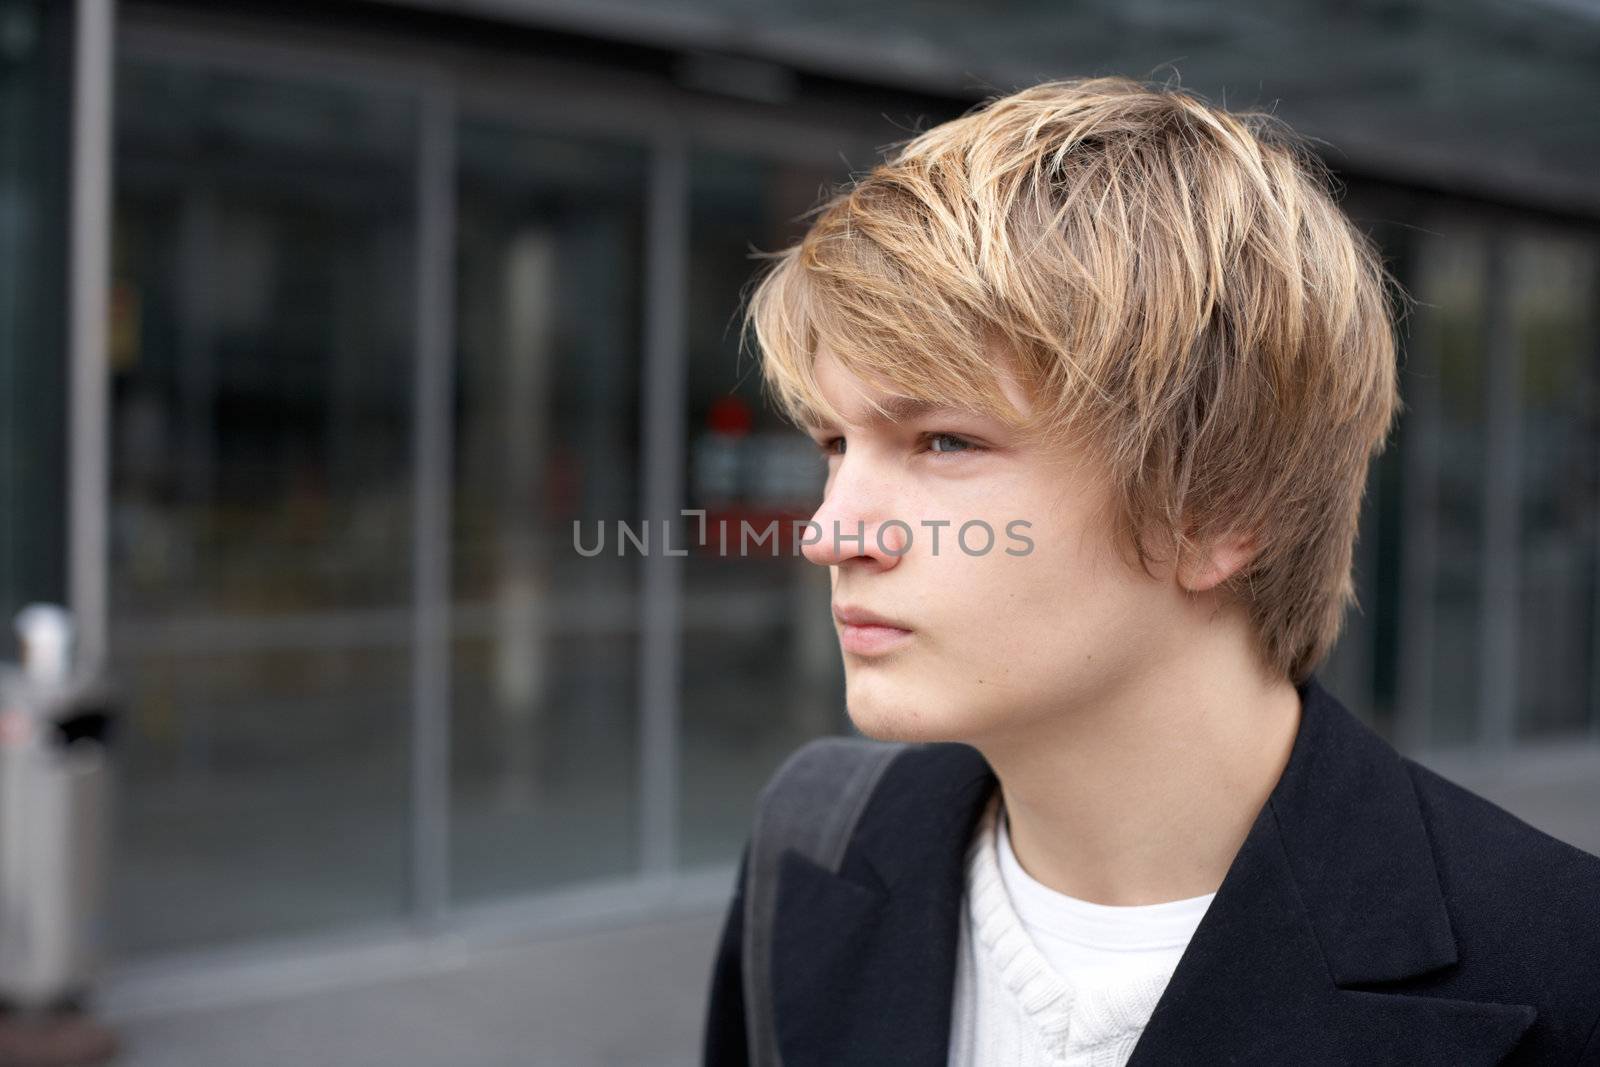 Thoughtful teenage boy outside modern building entrance